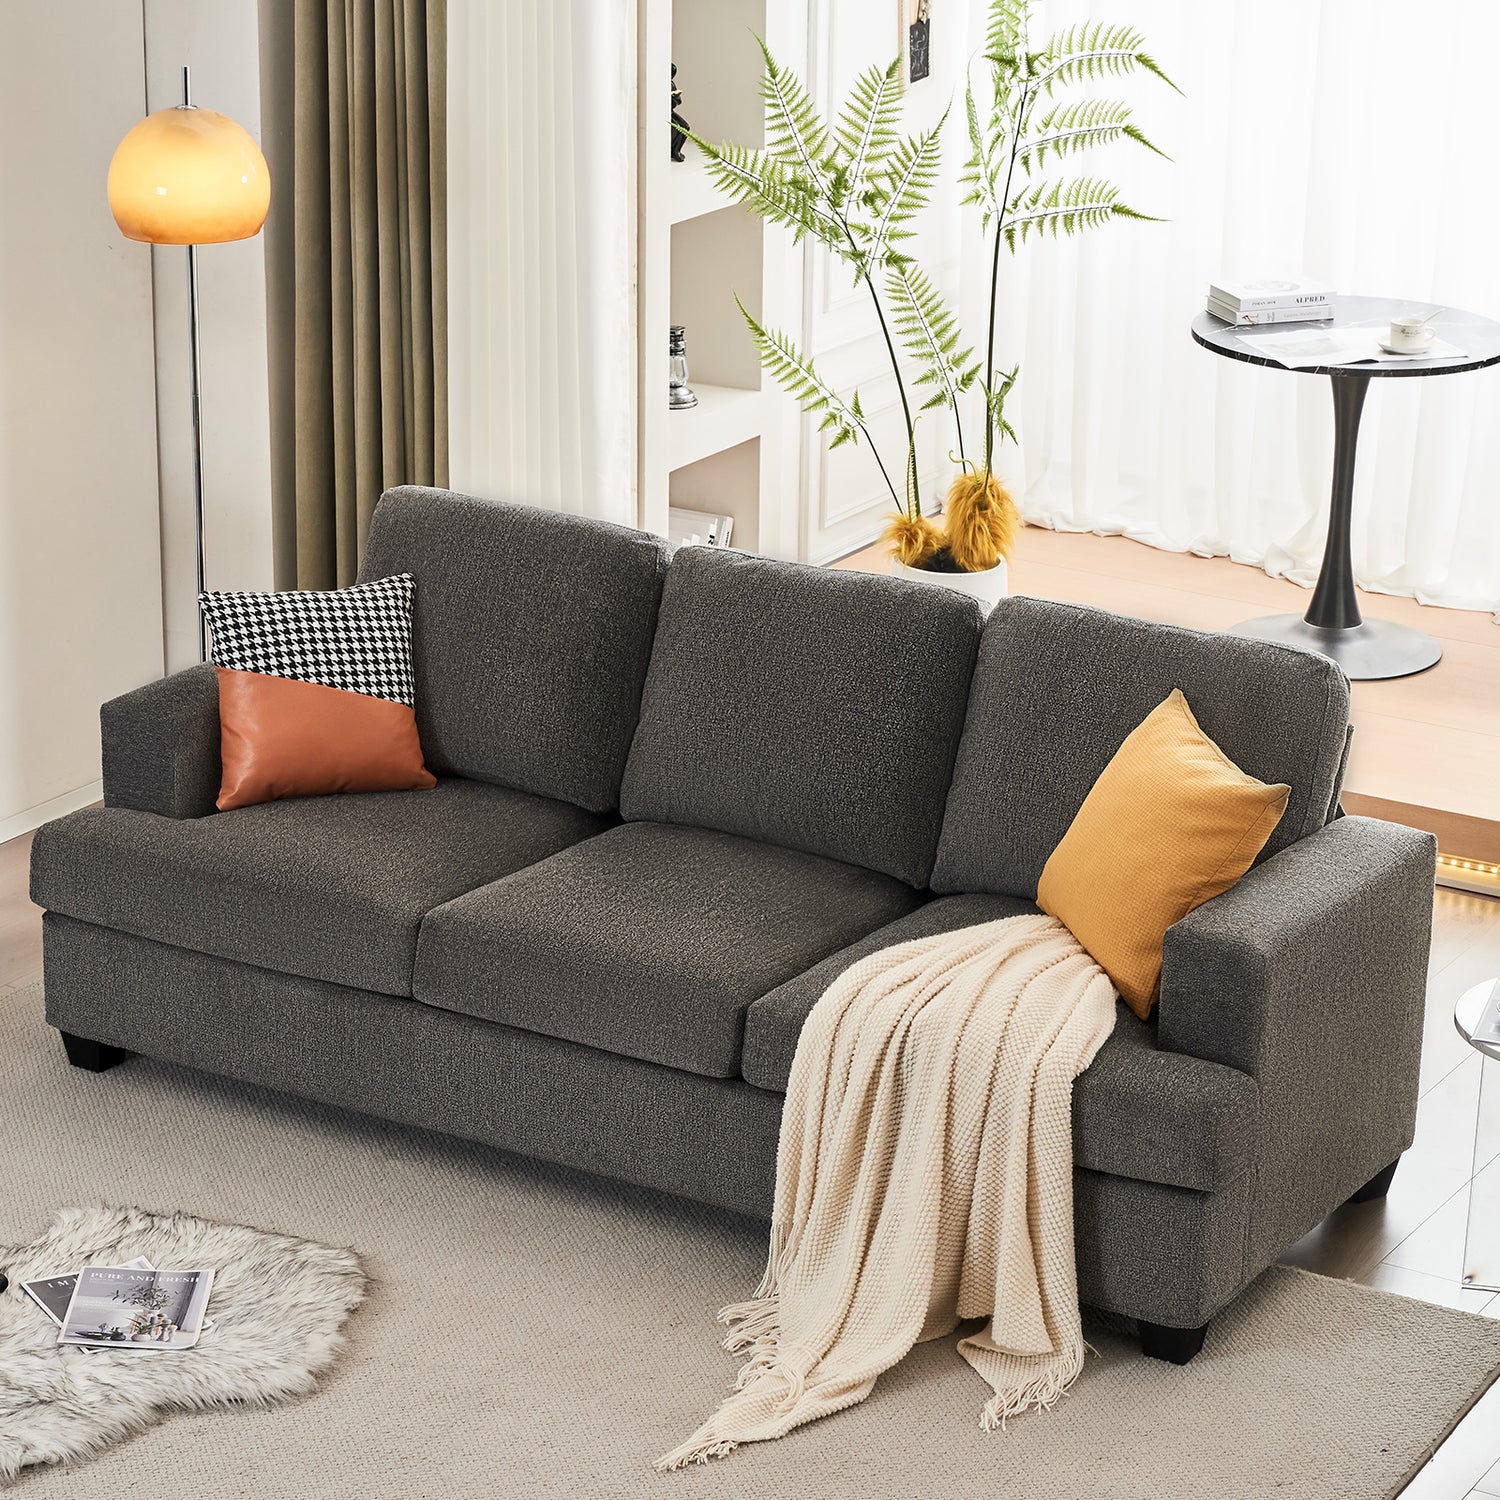 Amerlife Comfy 3 Seater Sofa